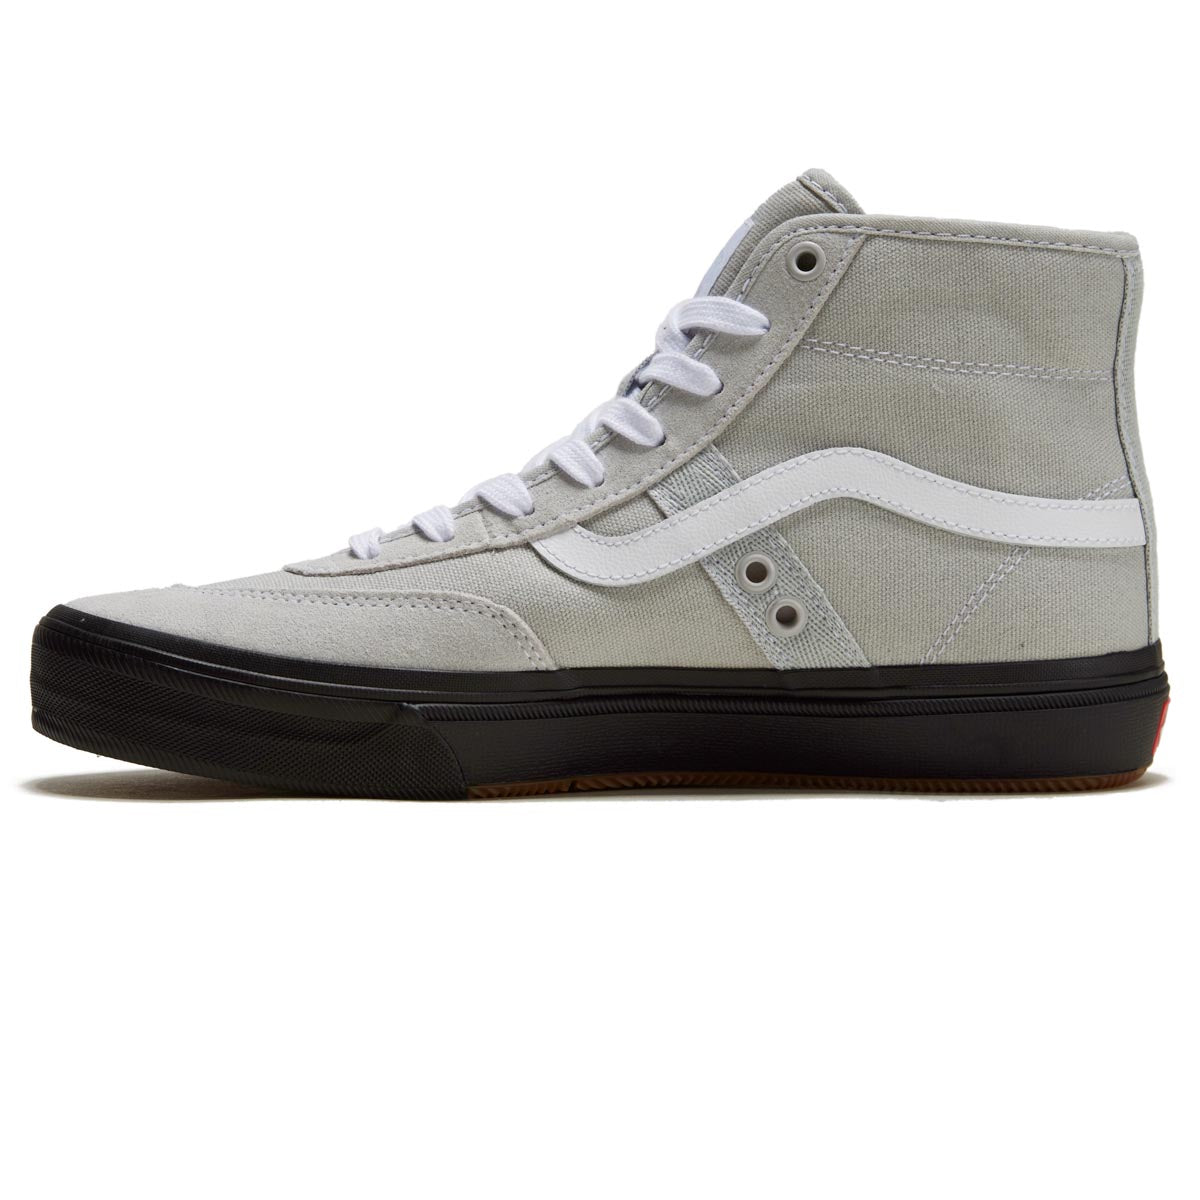 Vans Crockett High Shoes - Light Gray/Black image 2